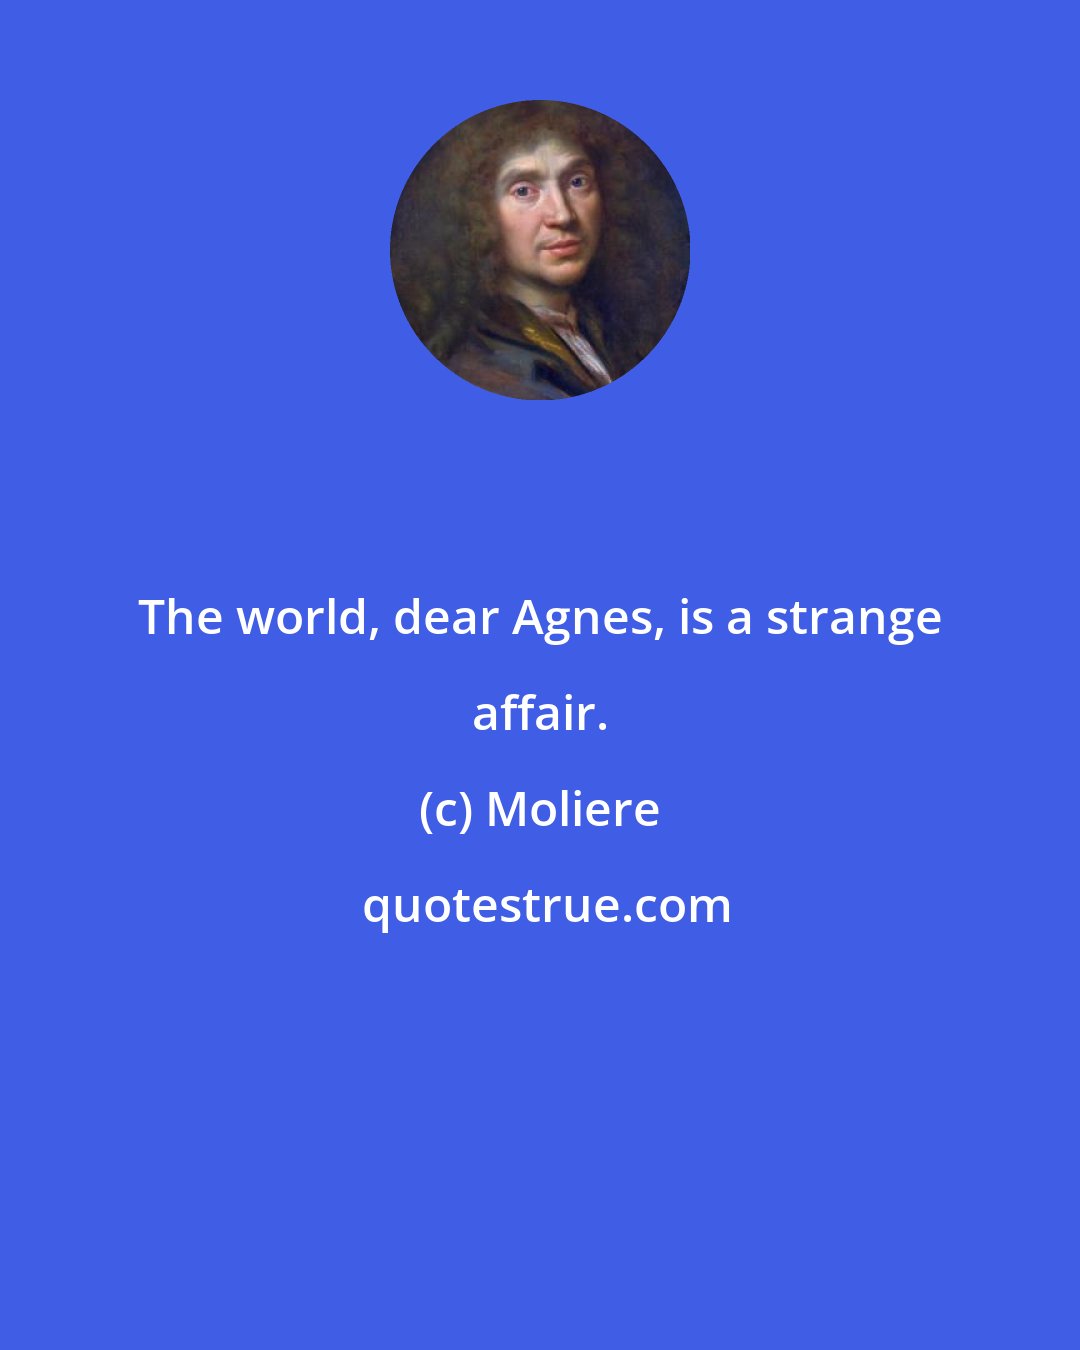 Moliere: The world, dear Agnes, is a strange affair.